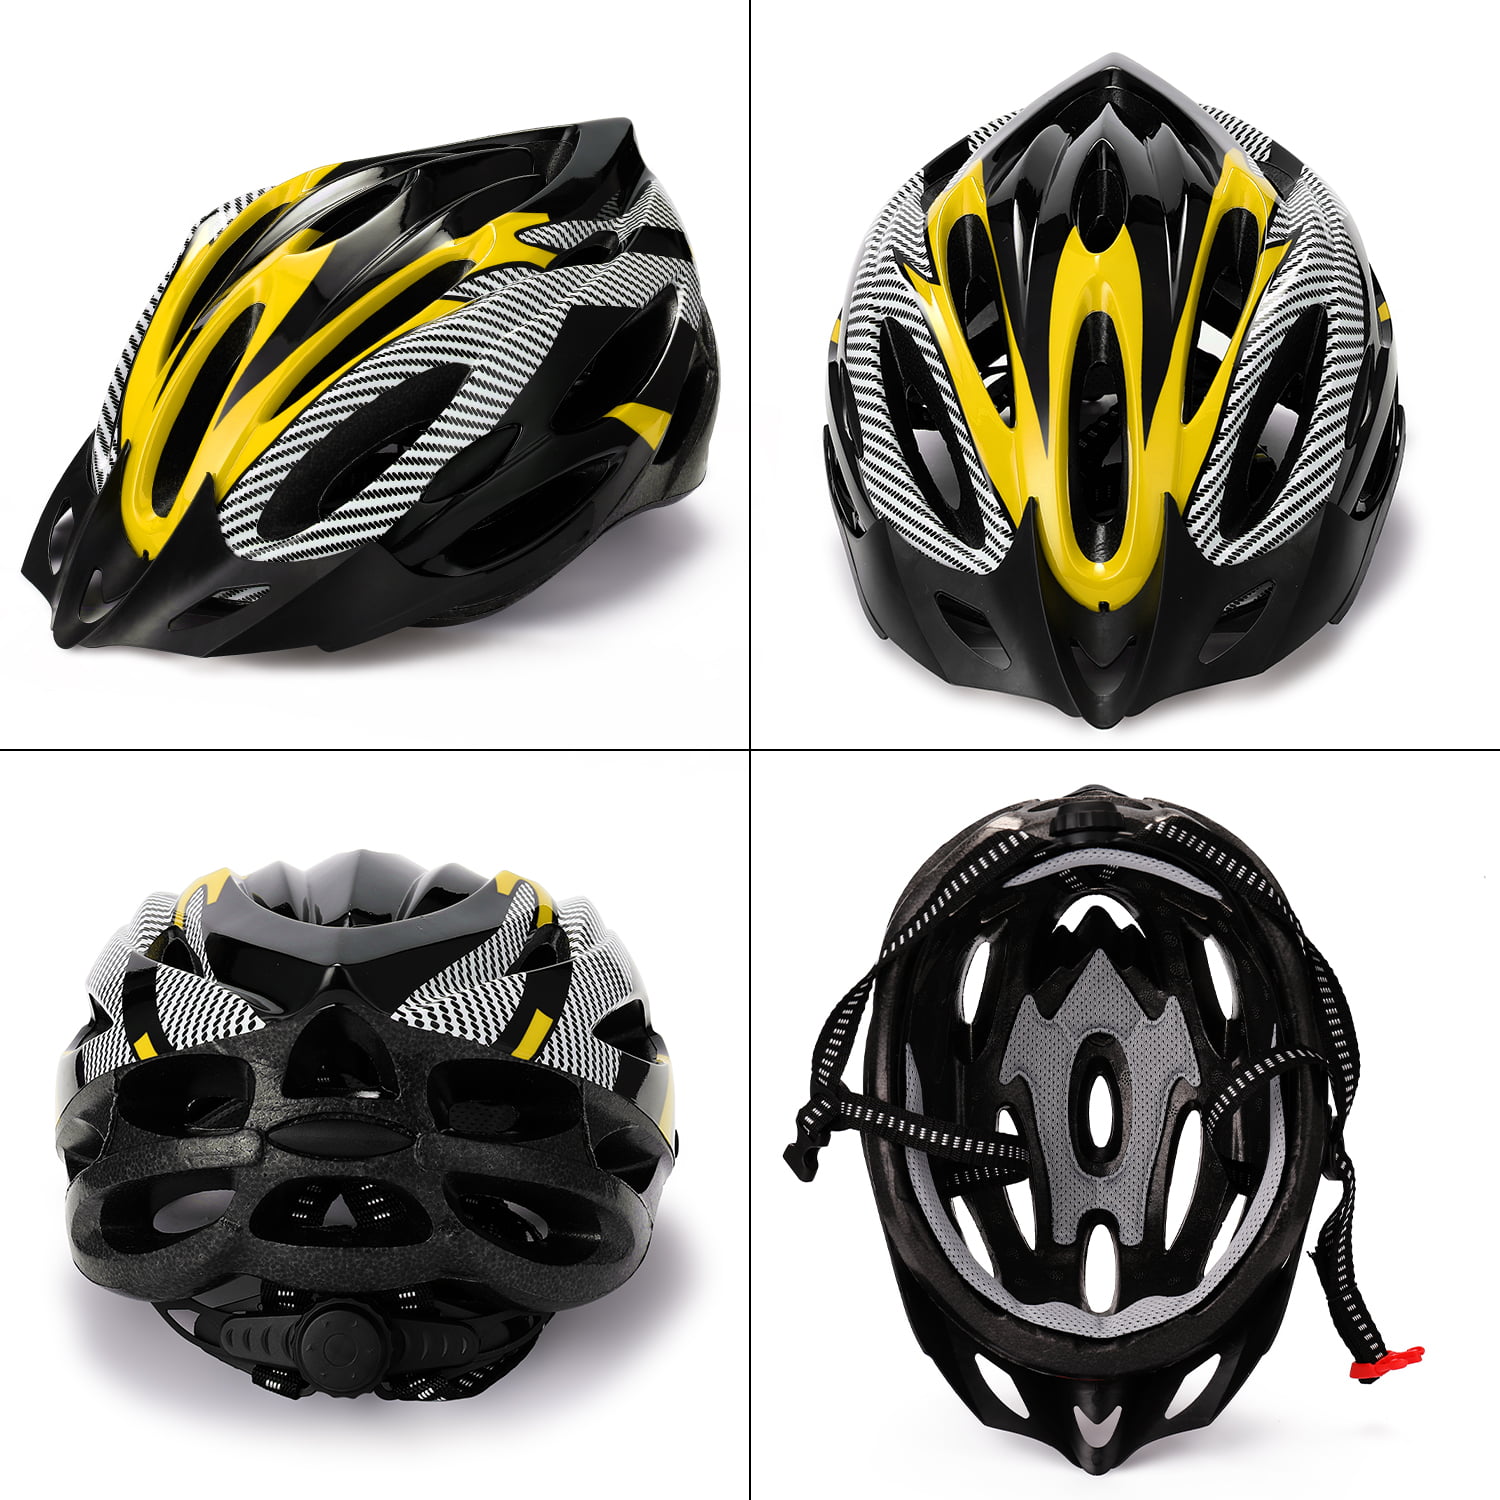 Details about   Adjustable Mountain Bicycle Helmet Ultralight Integrally-mold Bike Helmet Q8Z2 